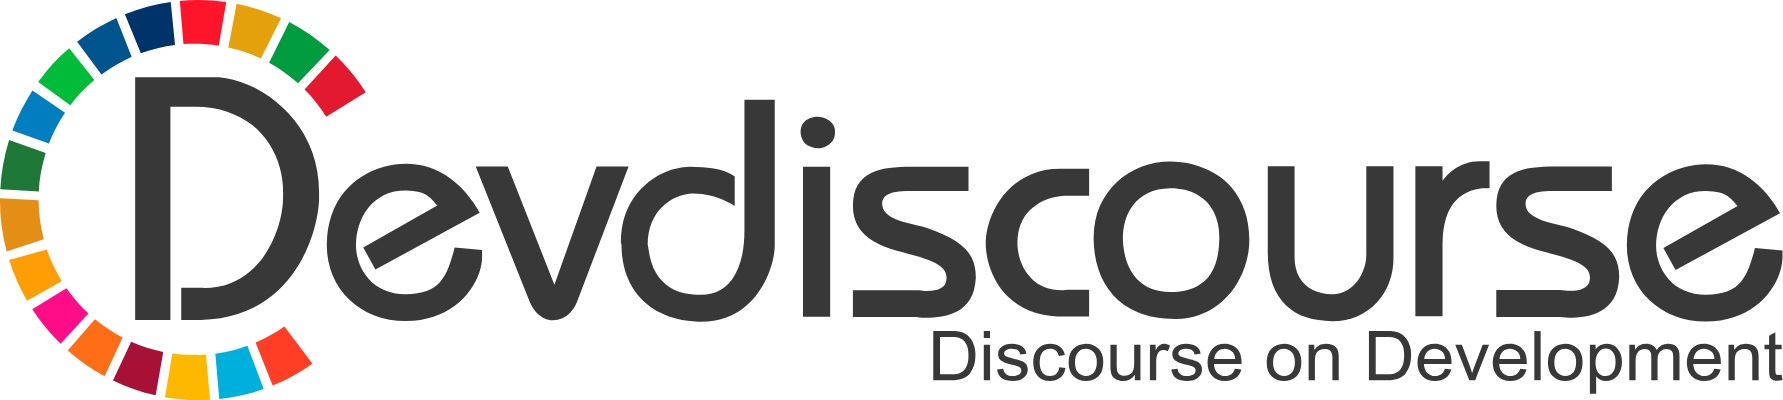 Devdiscourse Logo Banner 1783X400pxls (002)